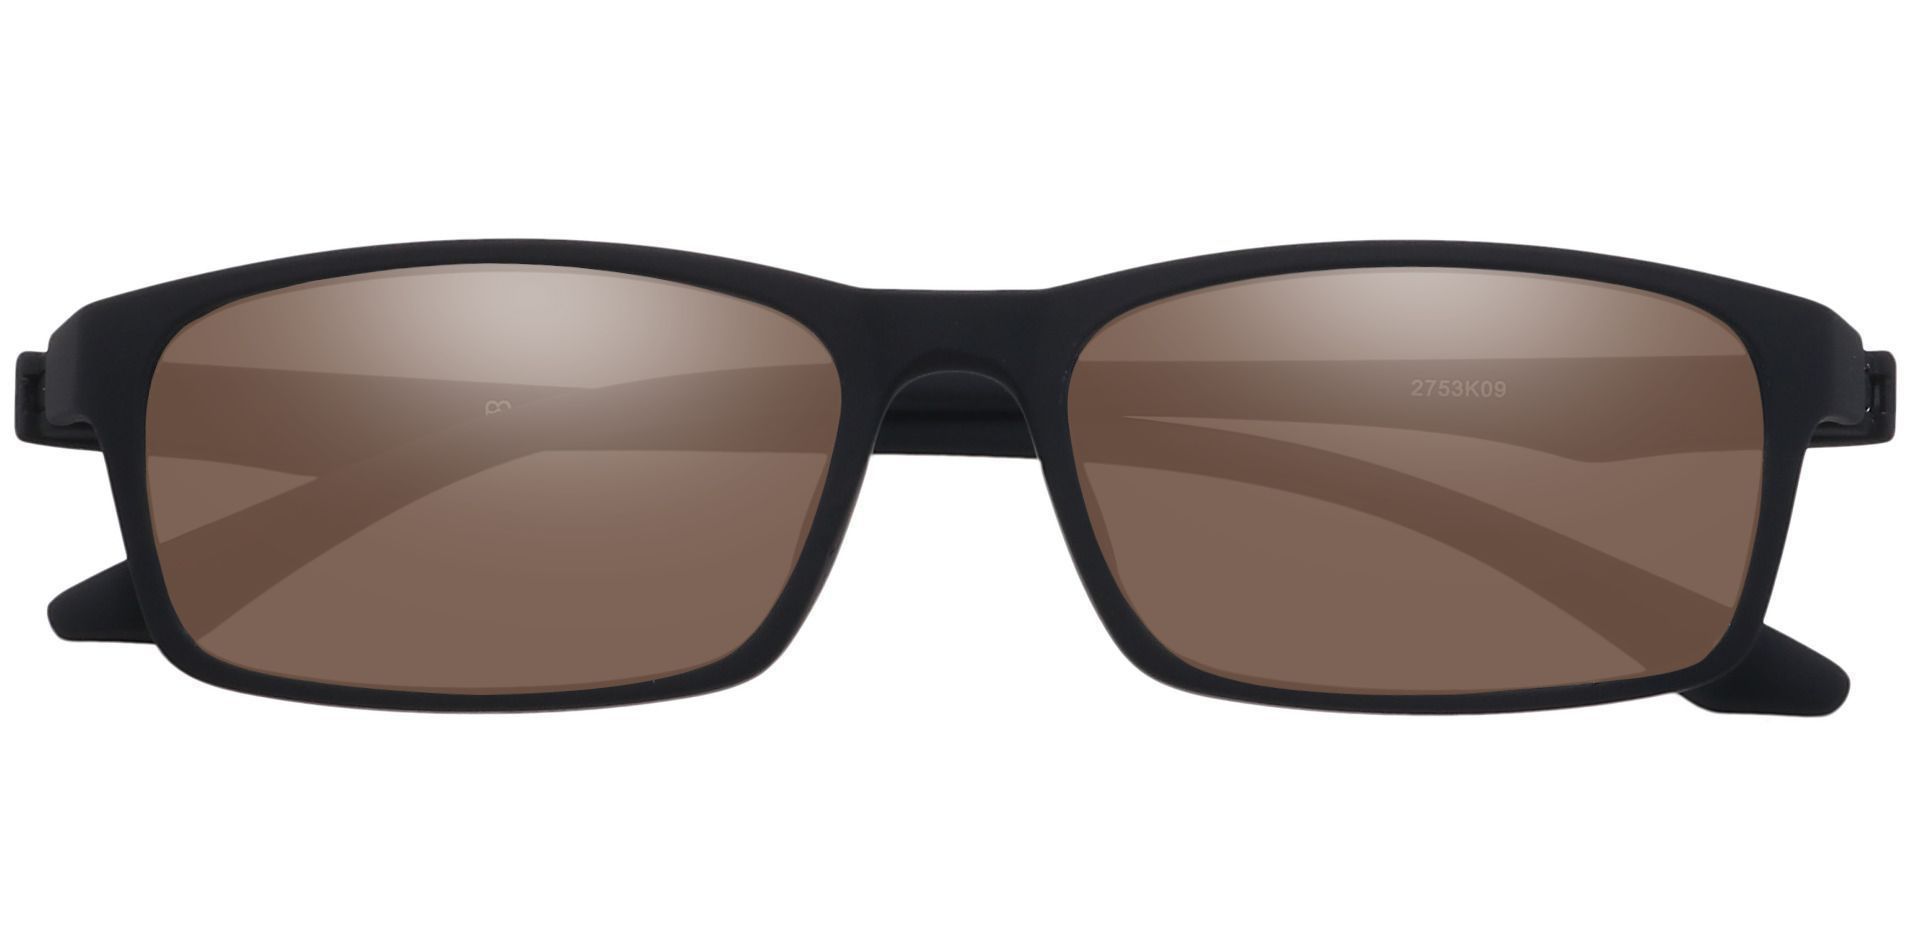 Poplar Rectangle Reading Sunglasses - Black Frame With Brown Lenses